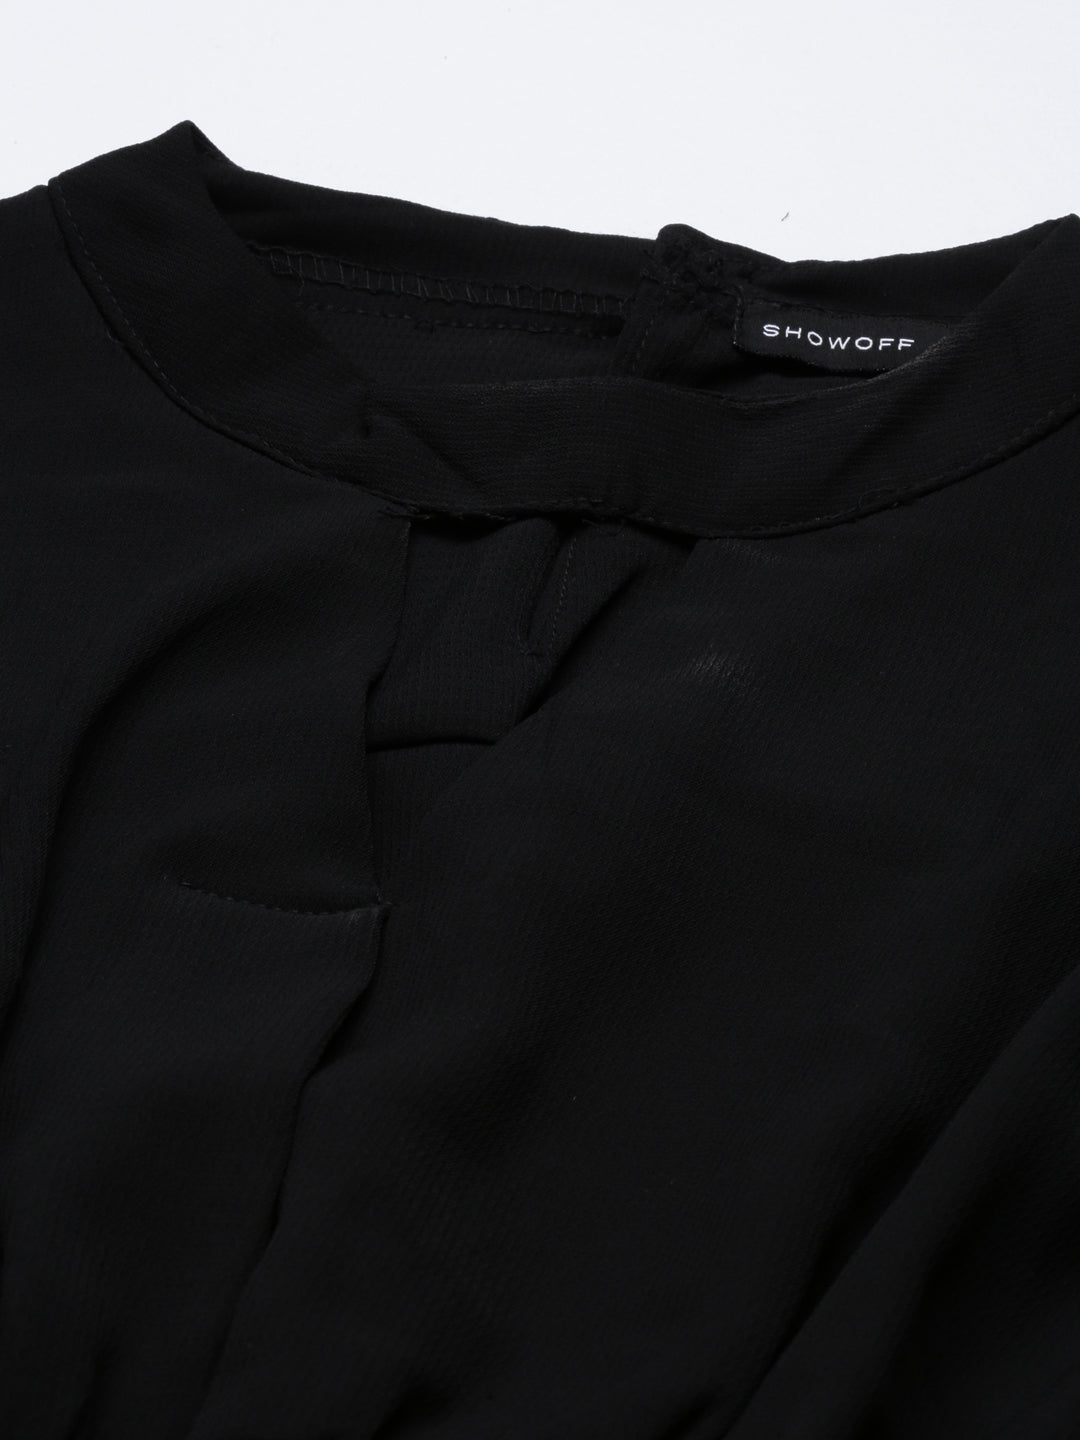 Keyhole Neck Bishop Sleeves Solid Cinched Waist Black Crop Top